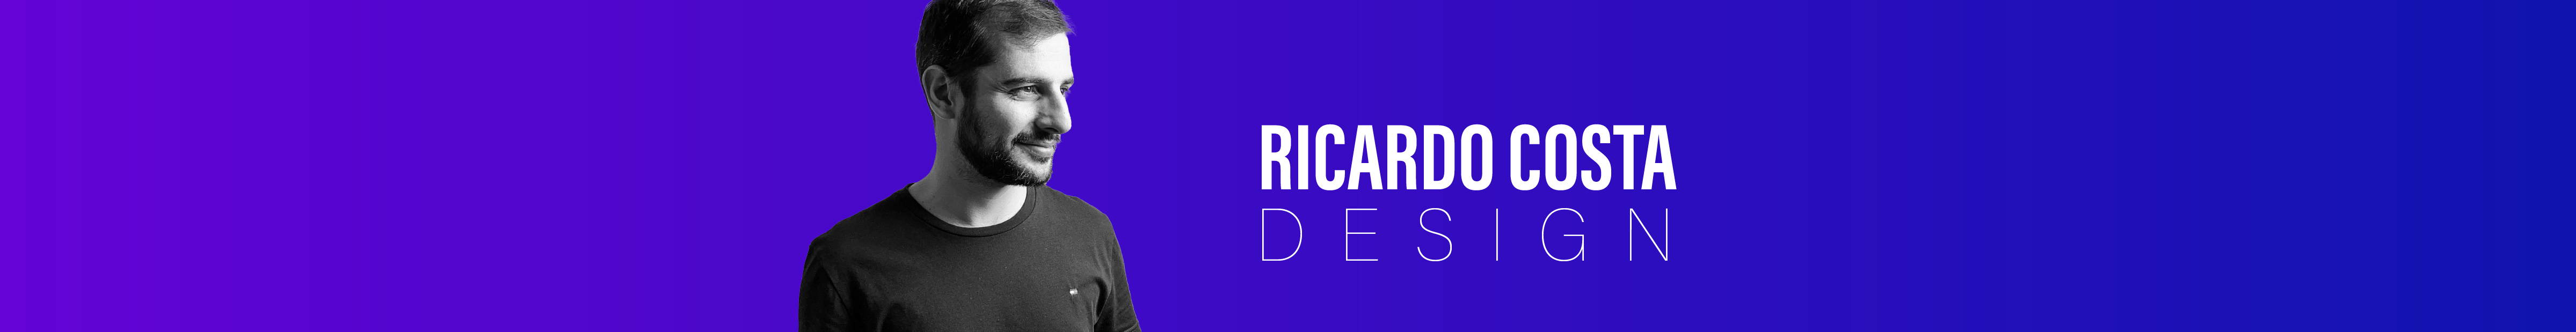 Ricardo Costa's profile banner